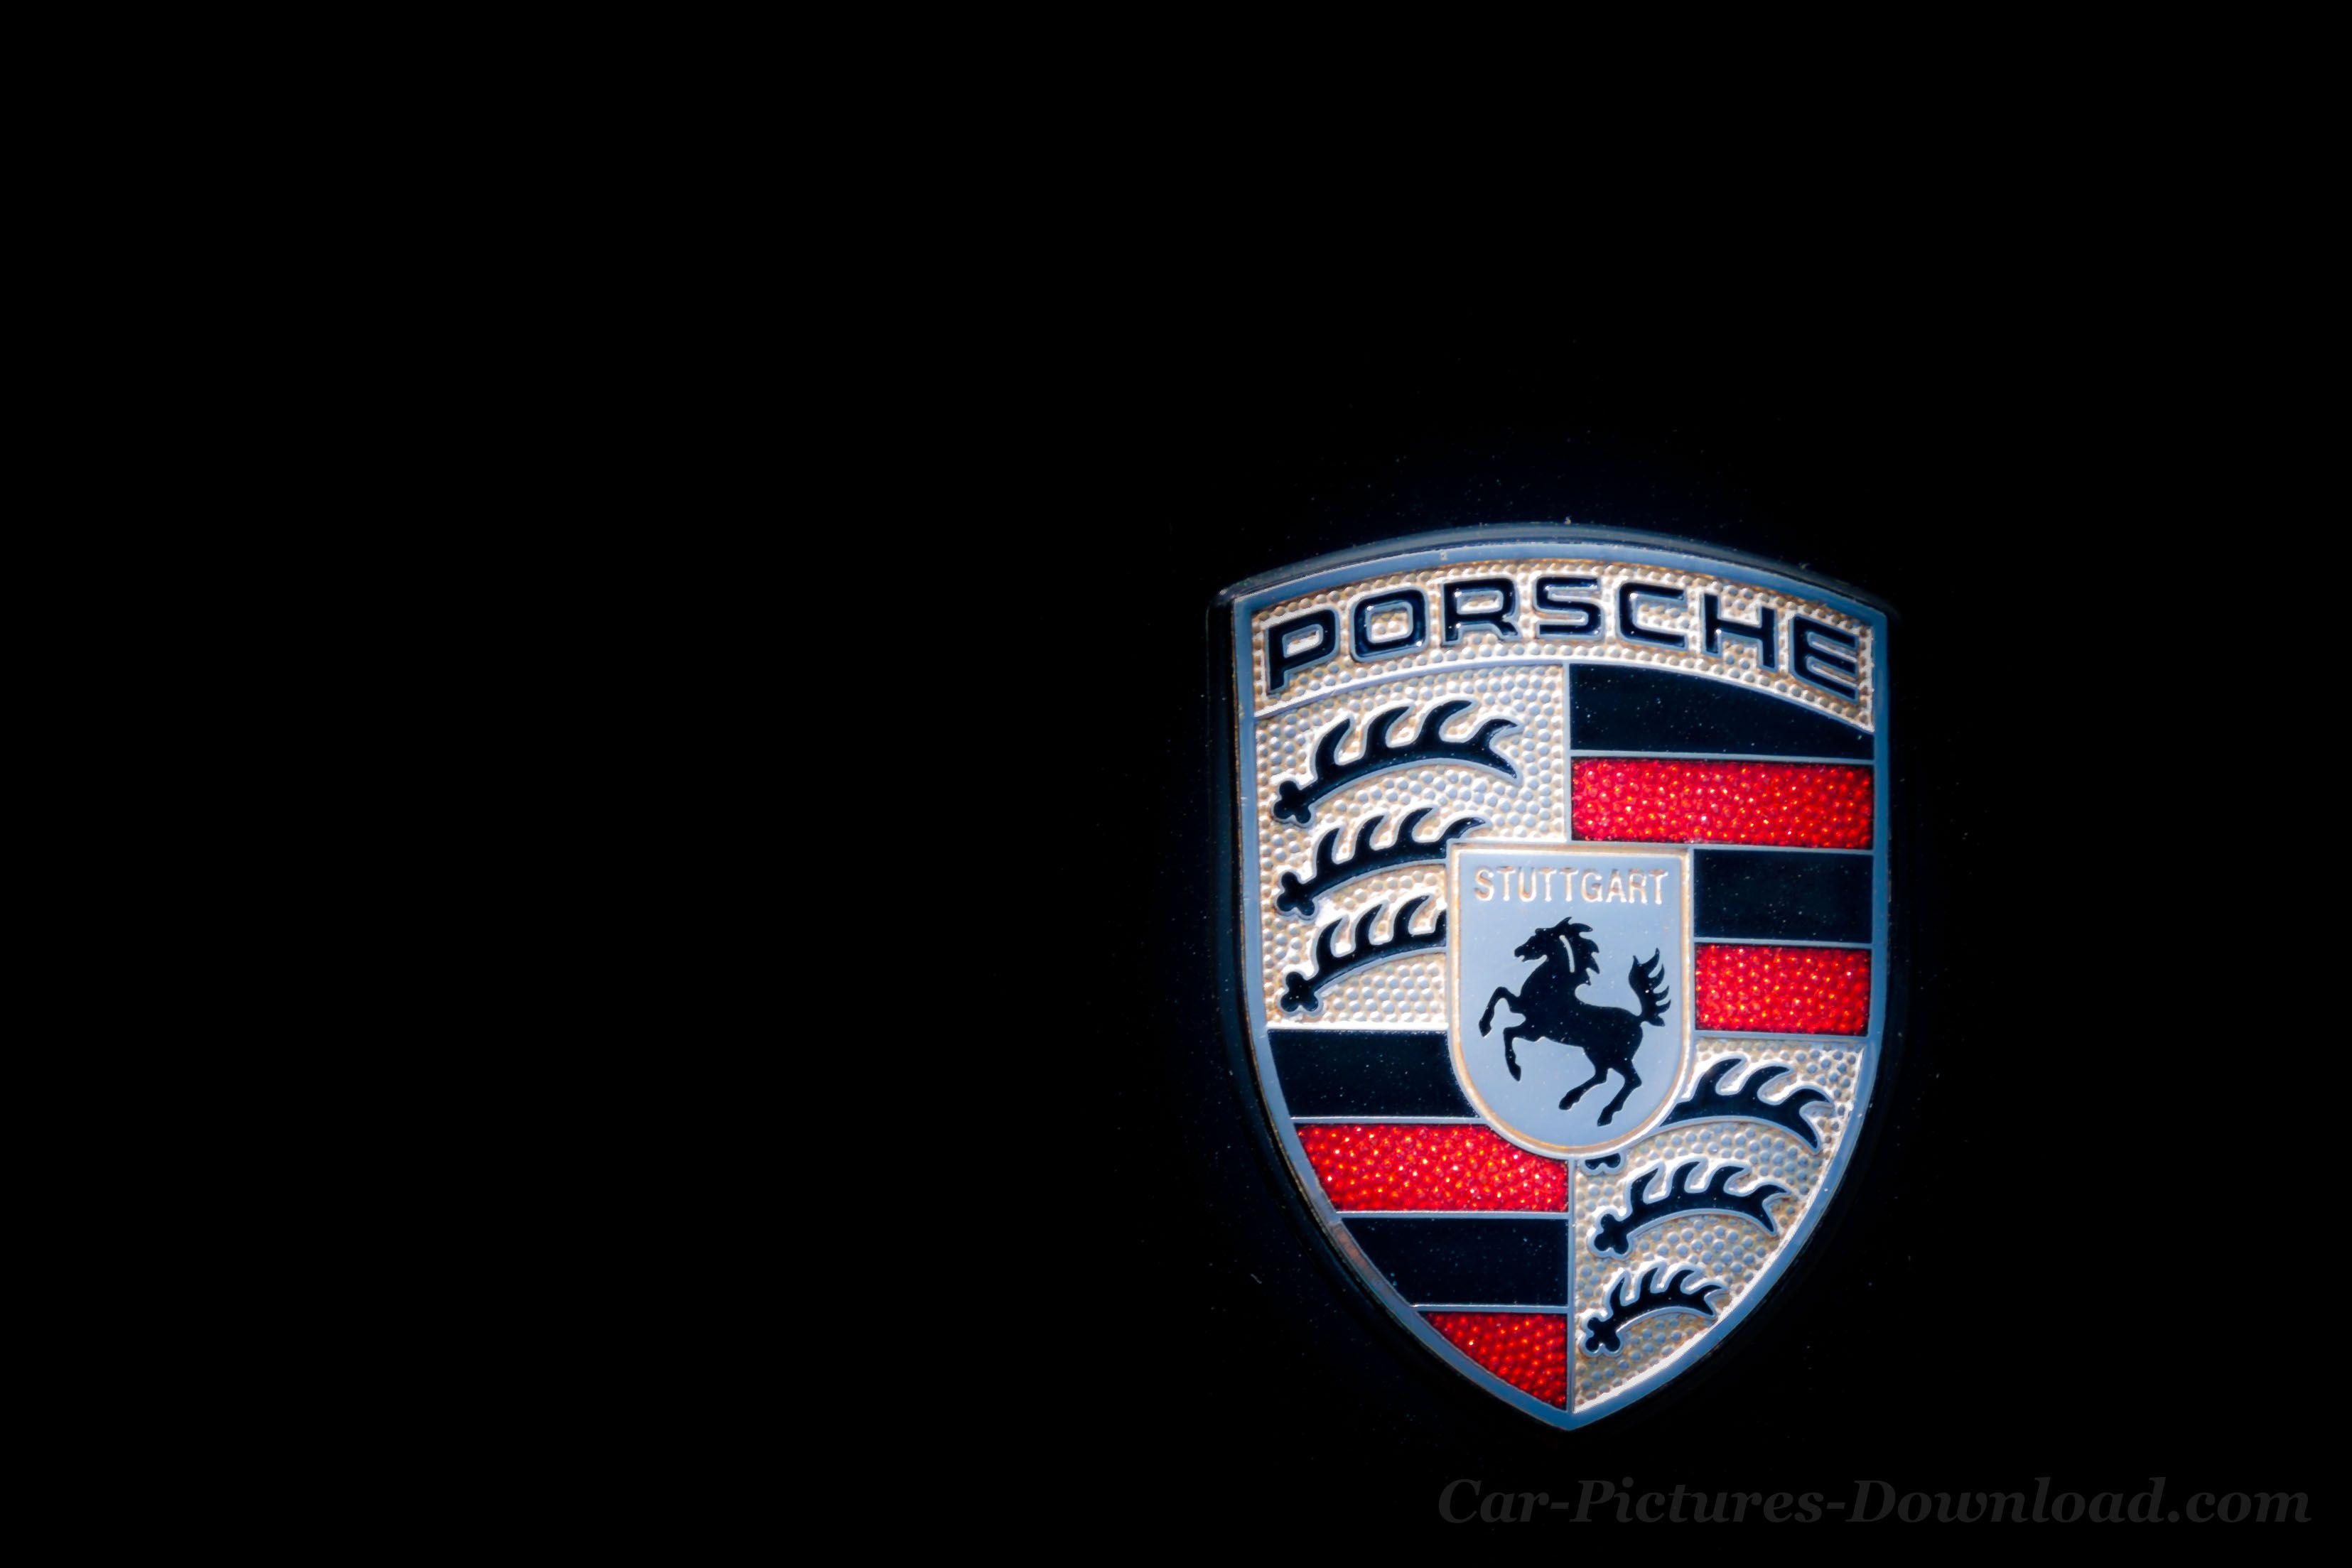 Porsche Logo Wallpapers - Top Free Porsche Logo Backgrounds -  WallpaperAccess